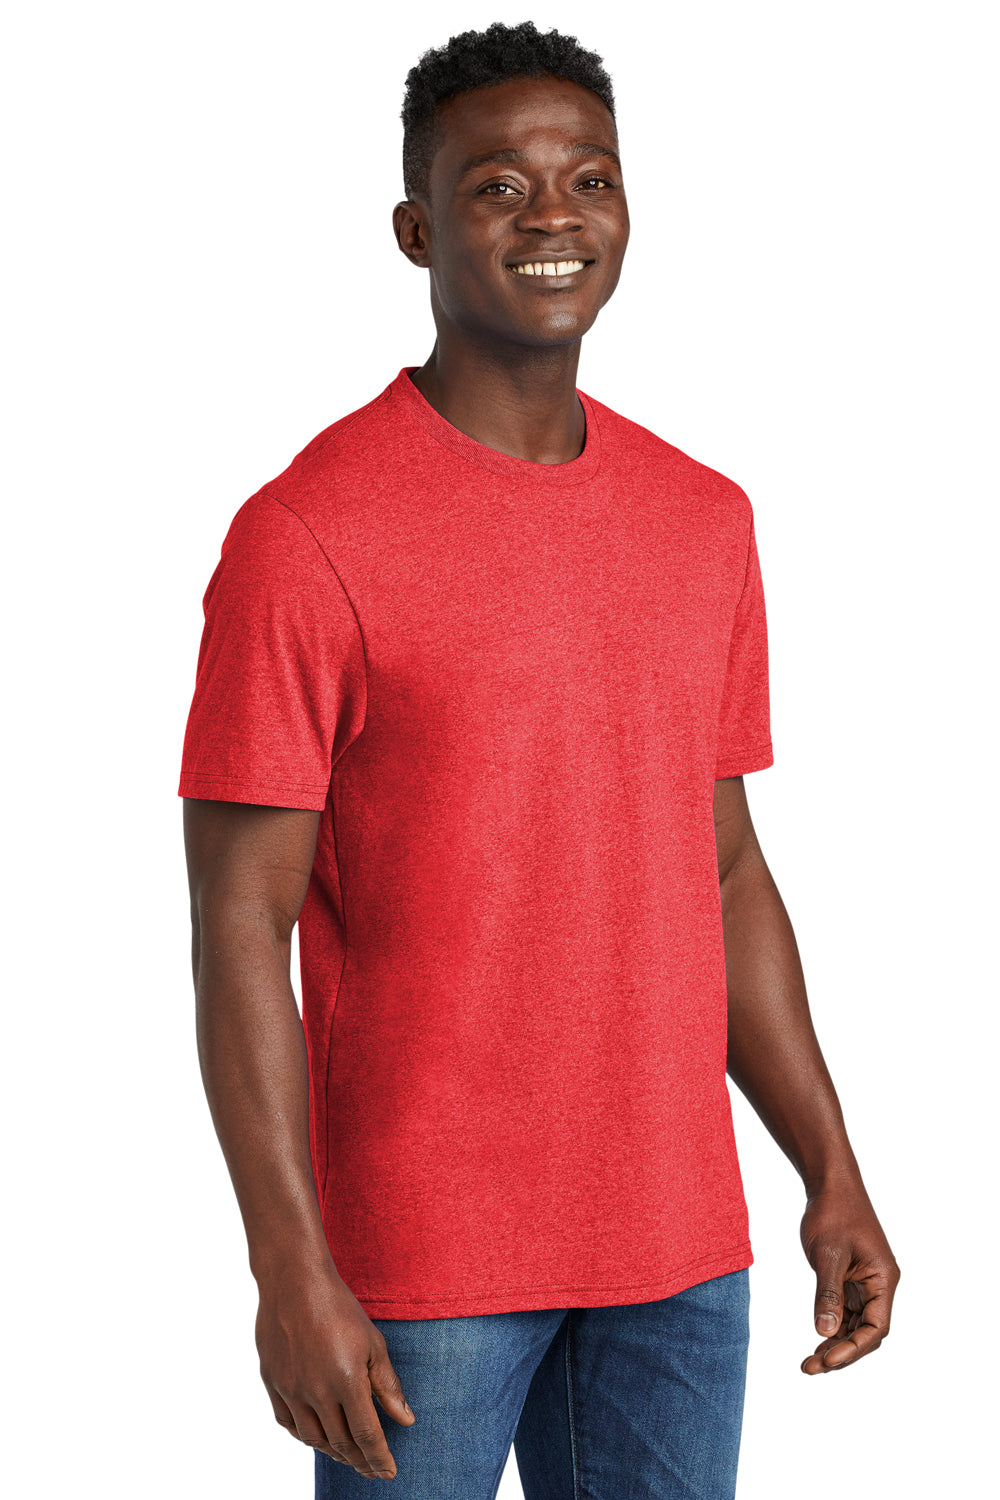 Allmade AL2300 Mens Recycled Short Sleeve Crewneck T-Shirt Heather Red Model 3Q